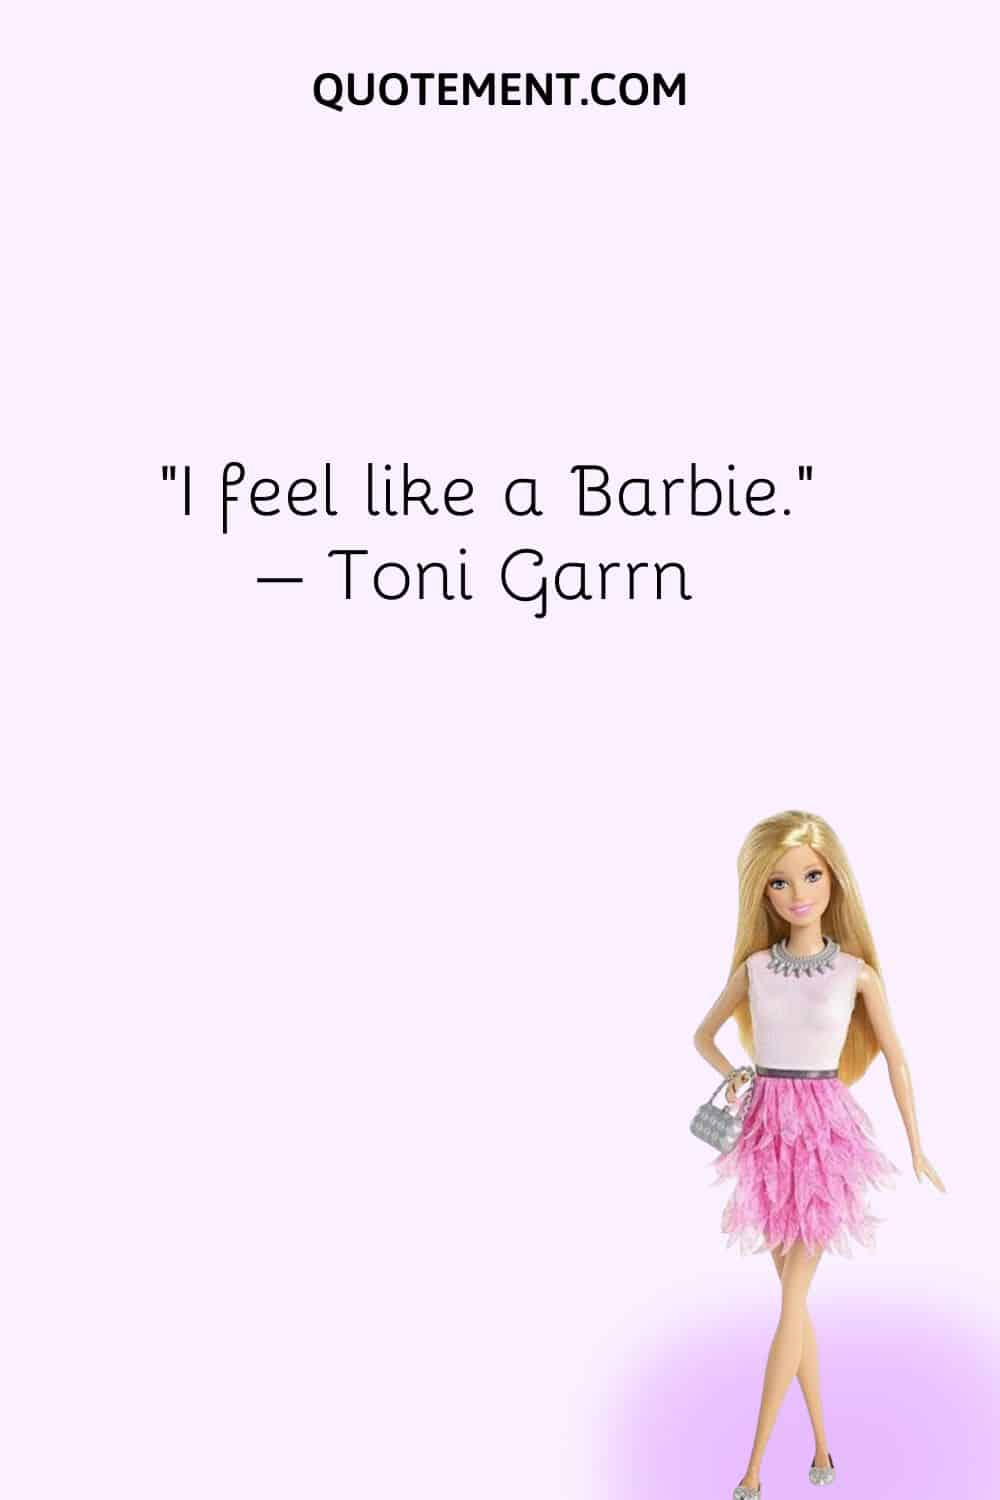 I feel like a Barbie